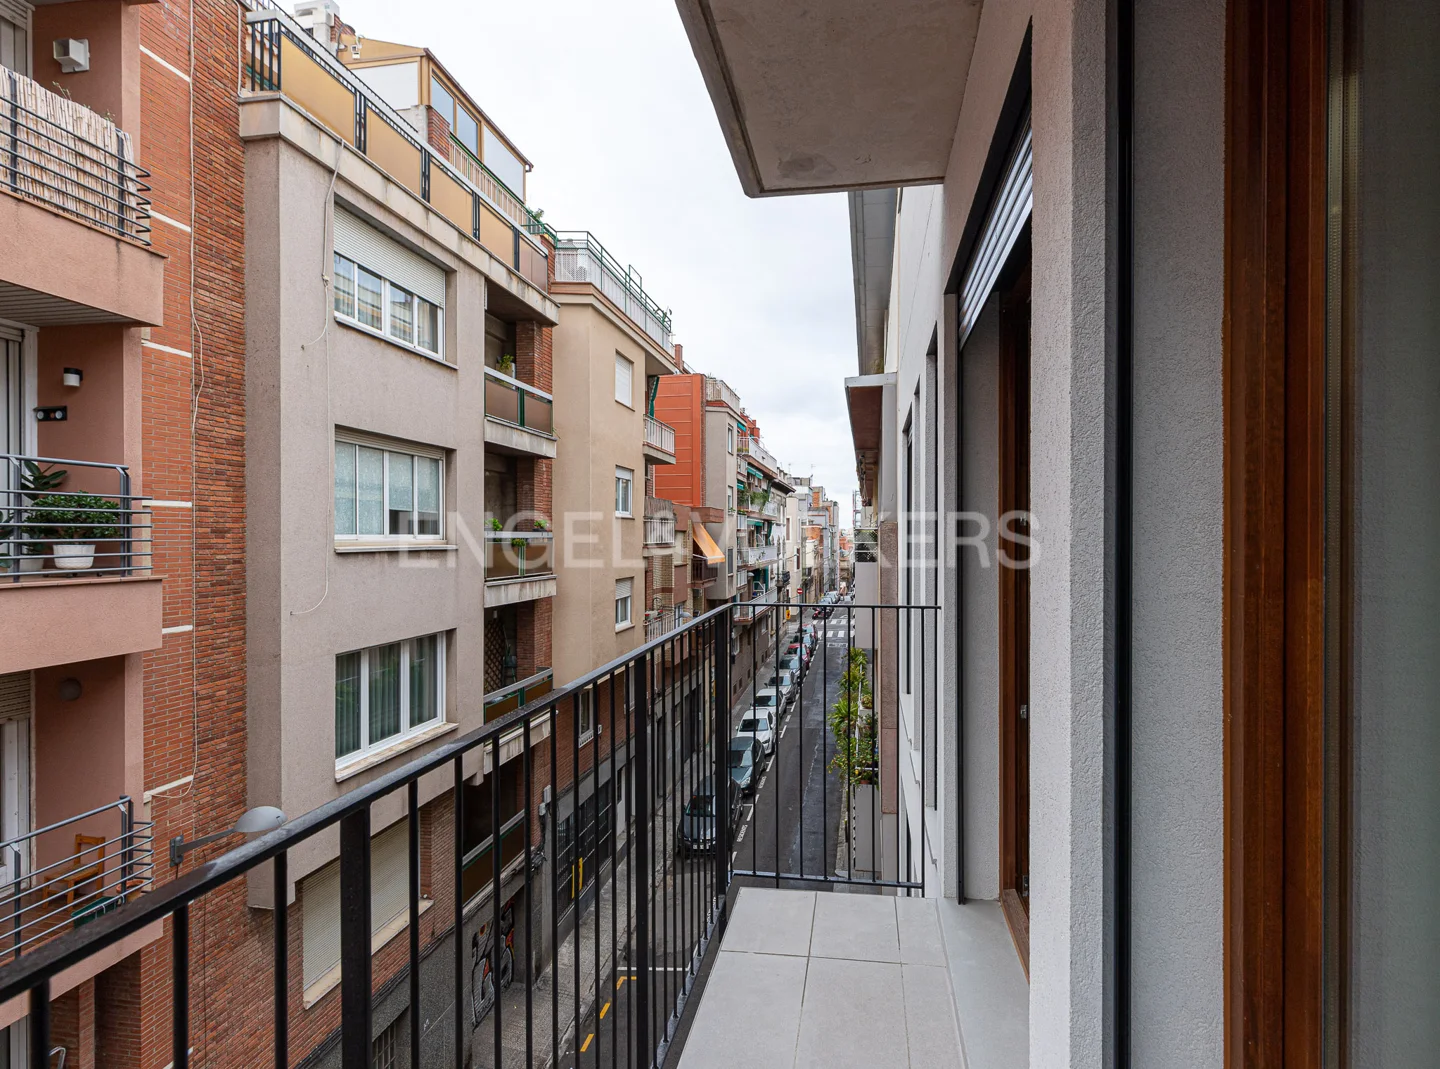 Splendid development in Gràcia with great finishes